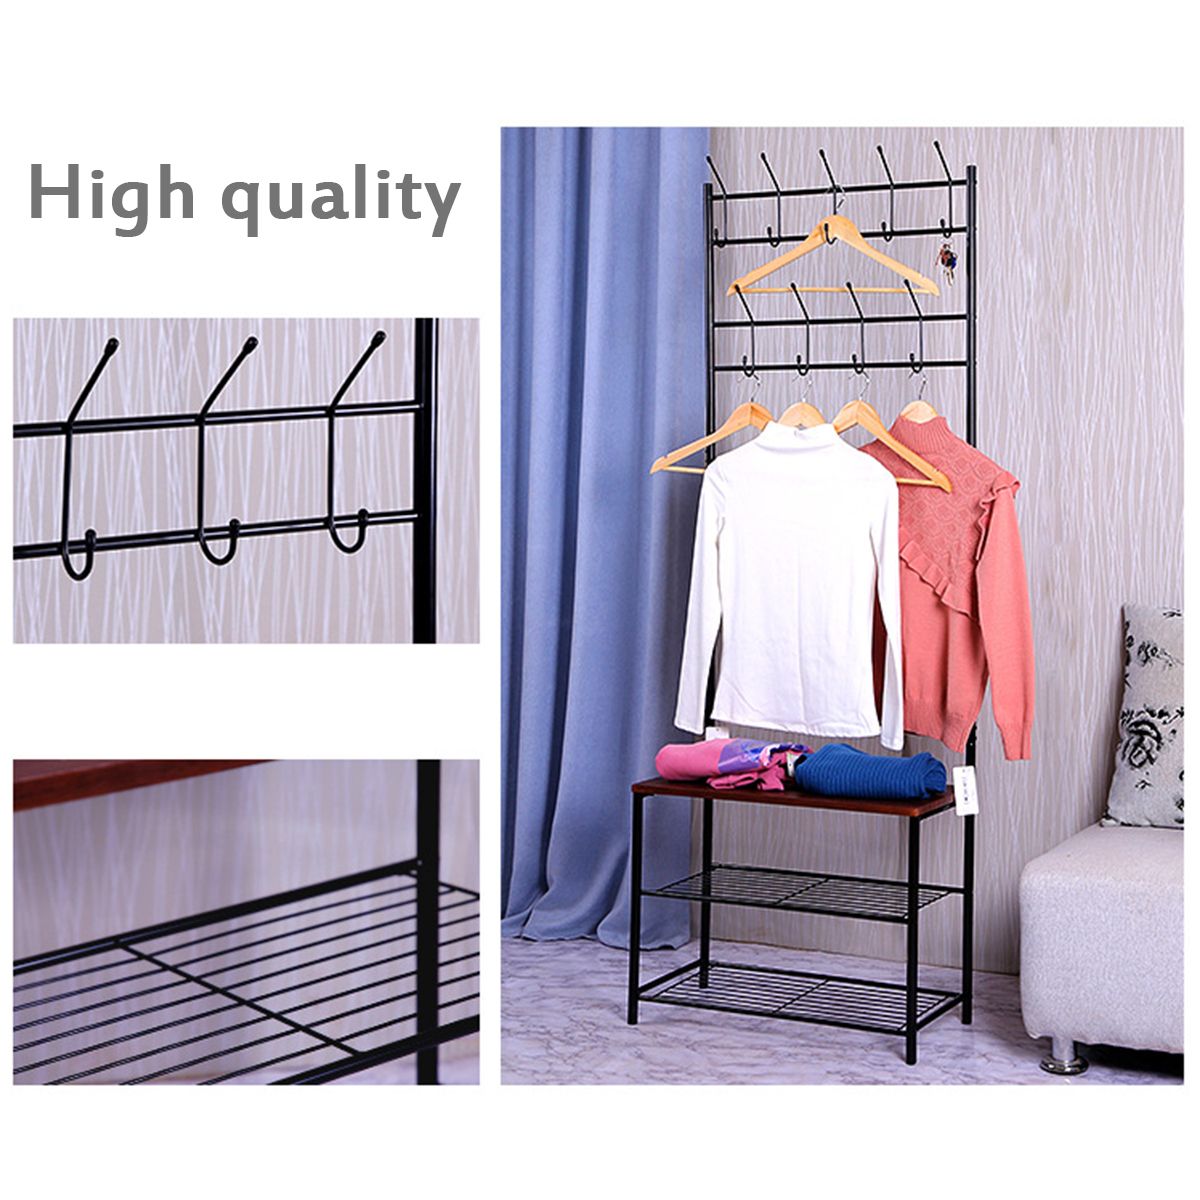 Portable-Clothes-Cloth-Coat-Rack-Hanger-Garment-Shoe-Rack-Hat-Hook-Bench-Shelf-1655121